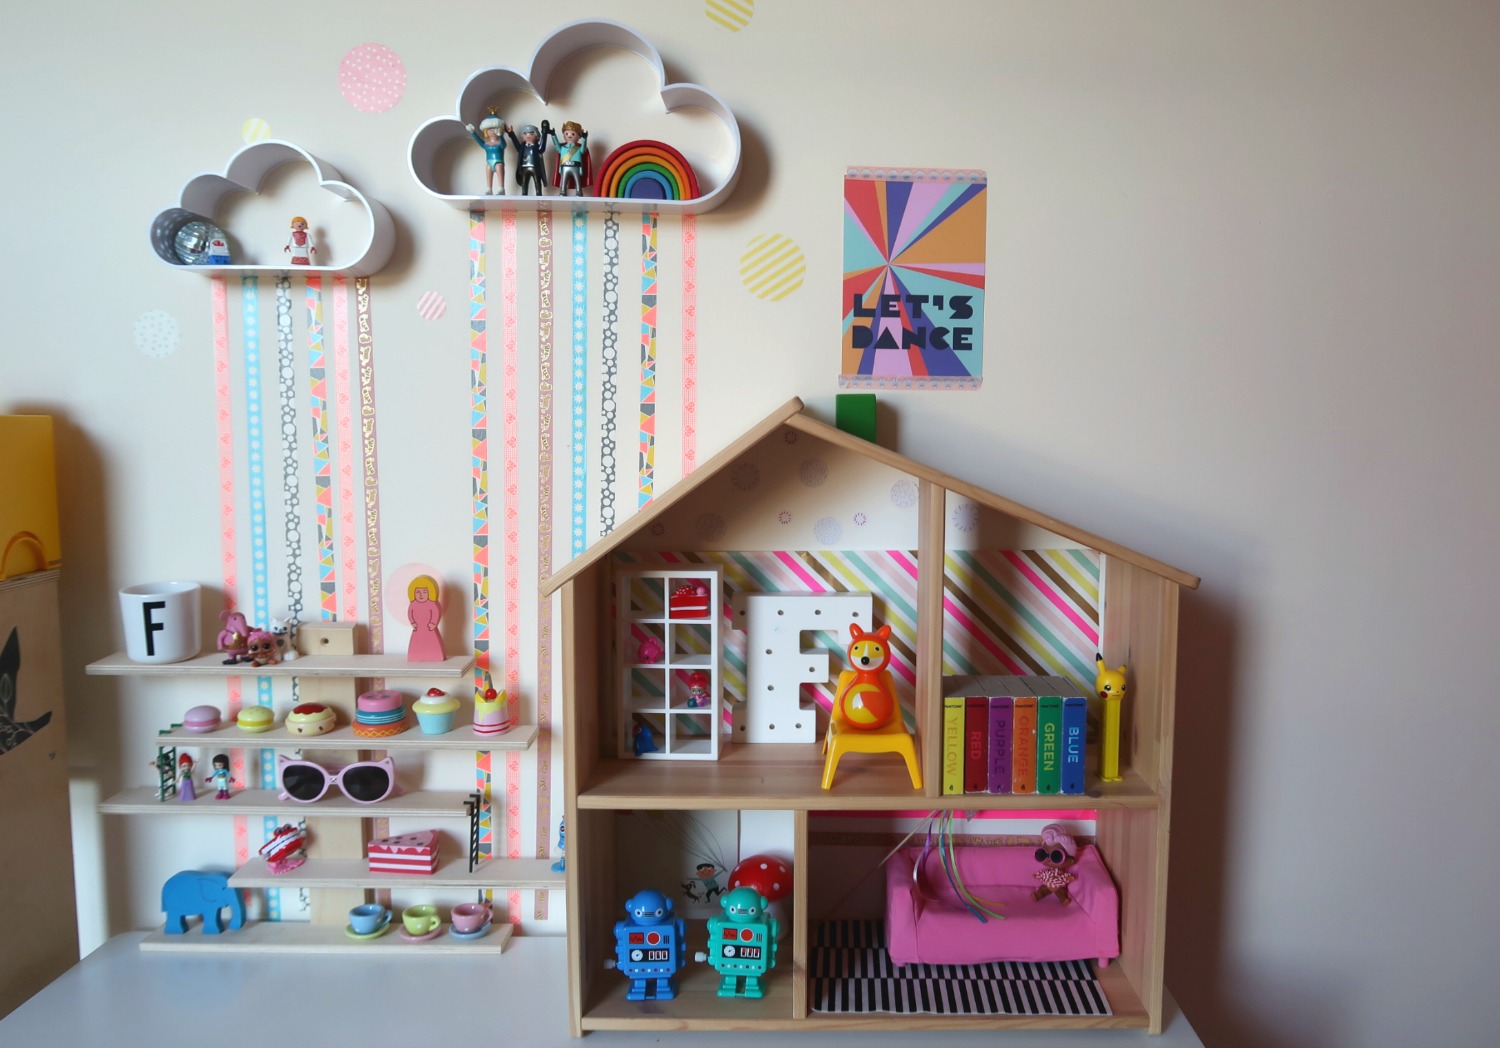 Kids-room-storage-from-IKEA-Flisat-shelf